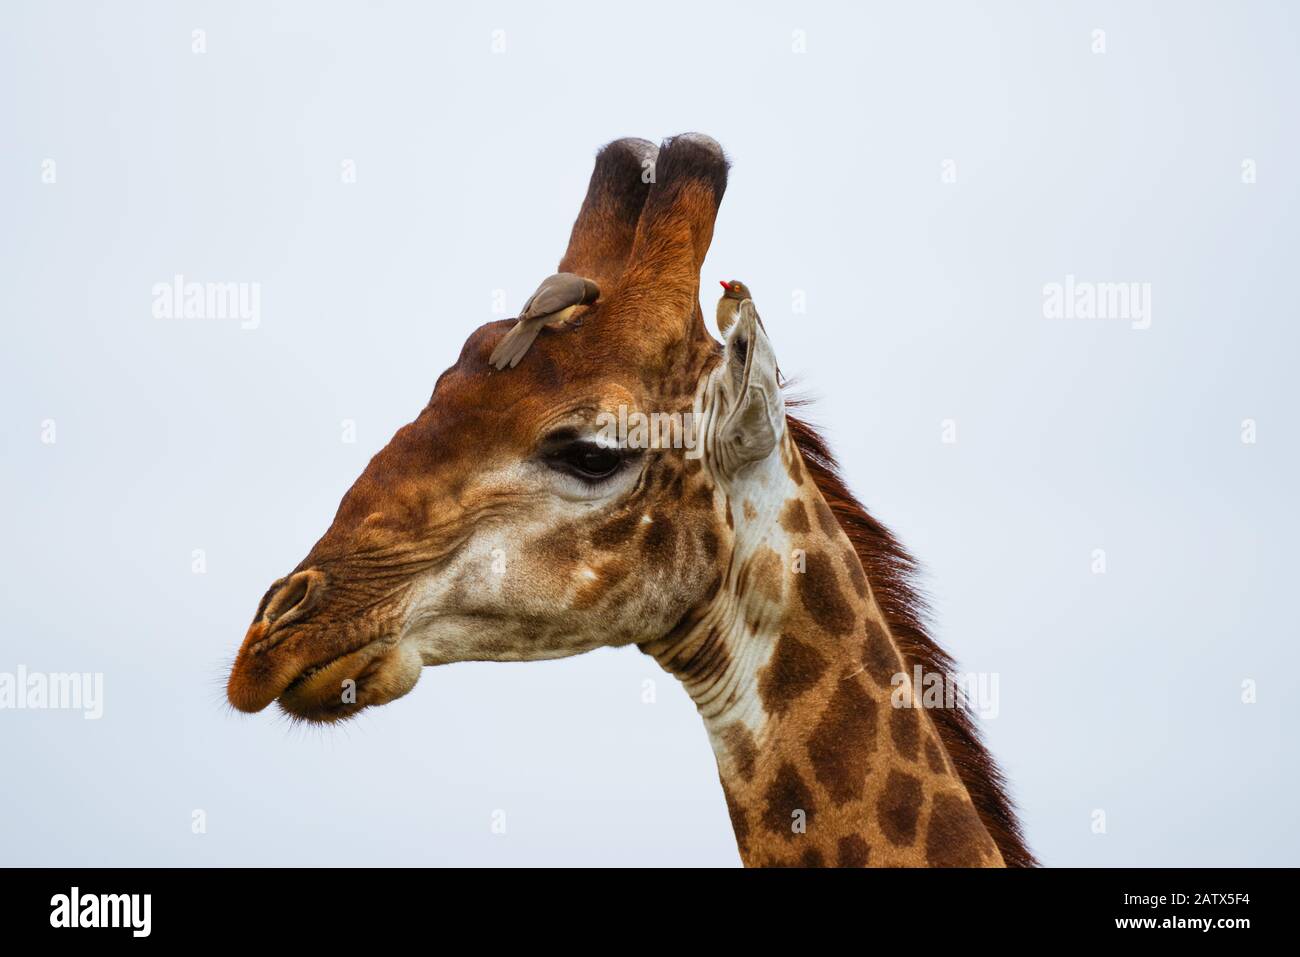 Oxpecker löscht die Ossicones einer Giraffe - Nambiti Private Game Reserve, Kwazulu Natal, Südafrika Stockfoto